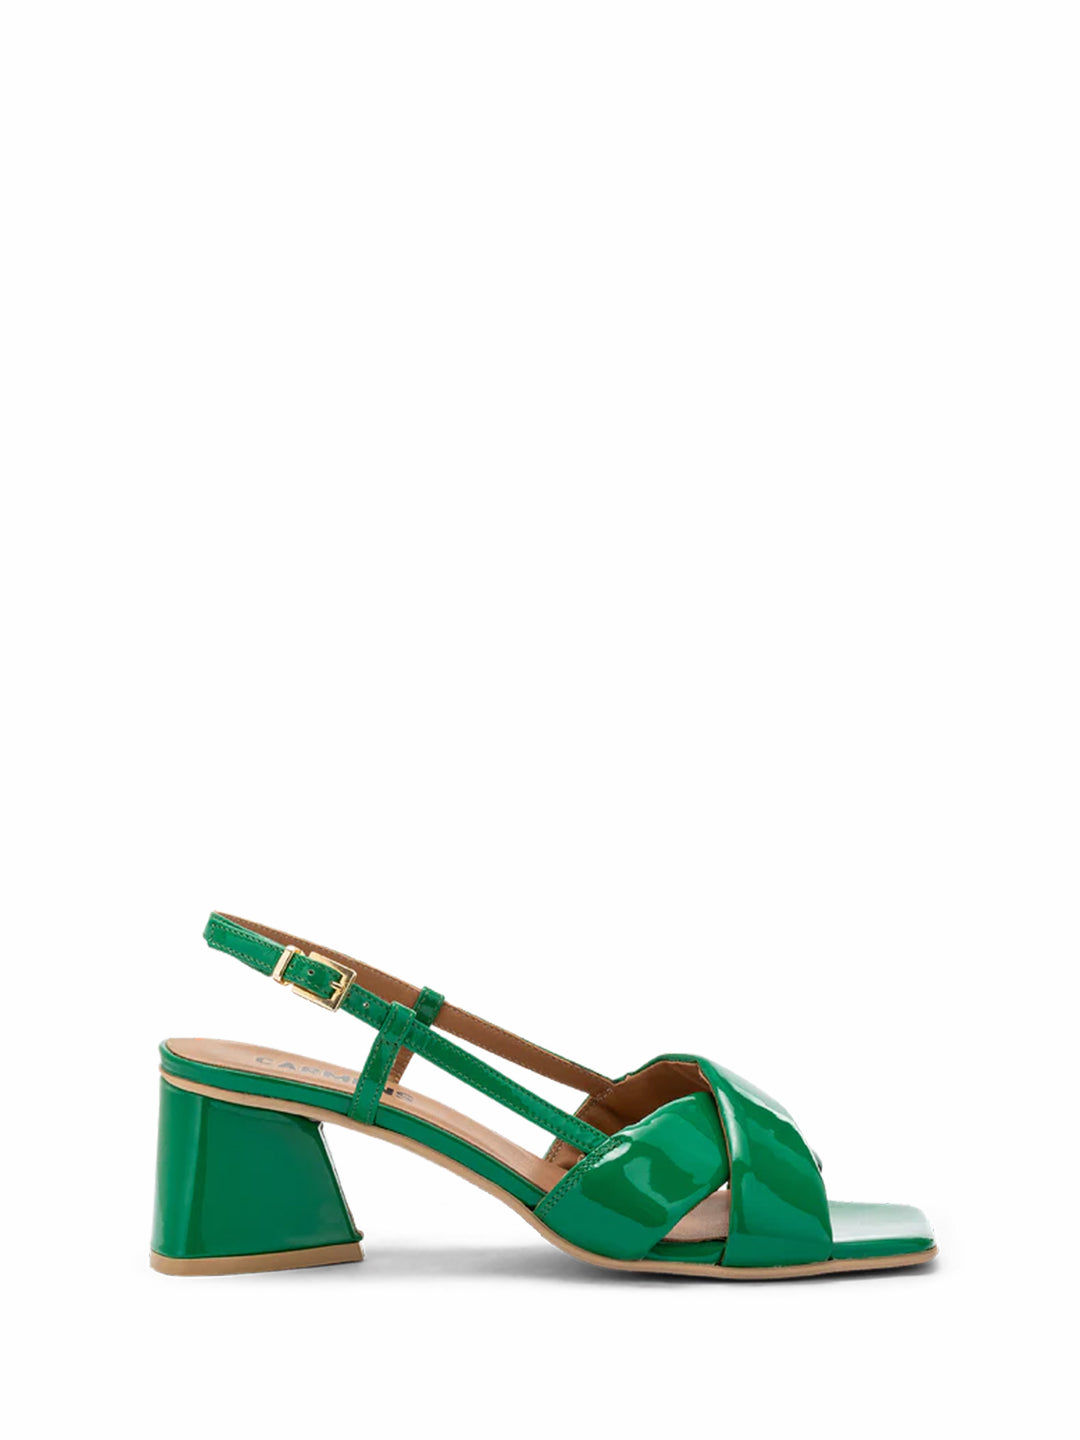 Carmens green Carry Cross sandals